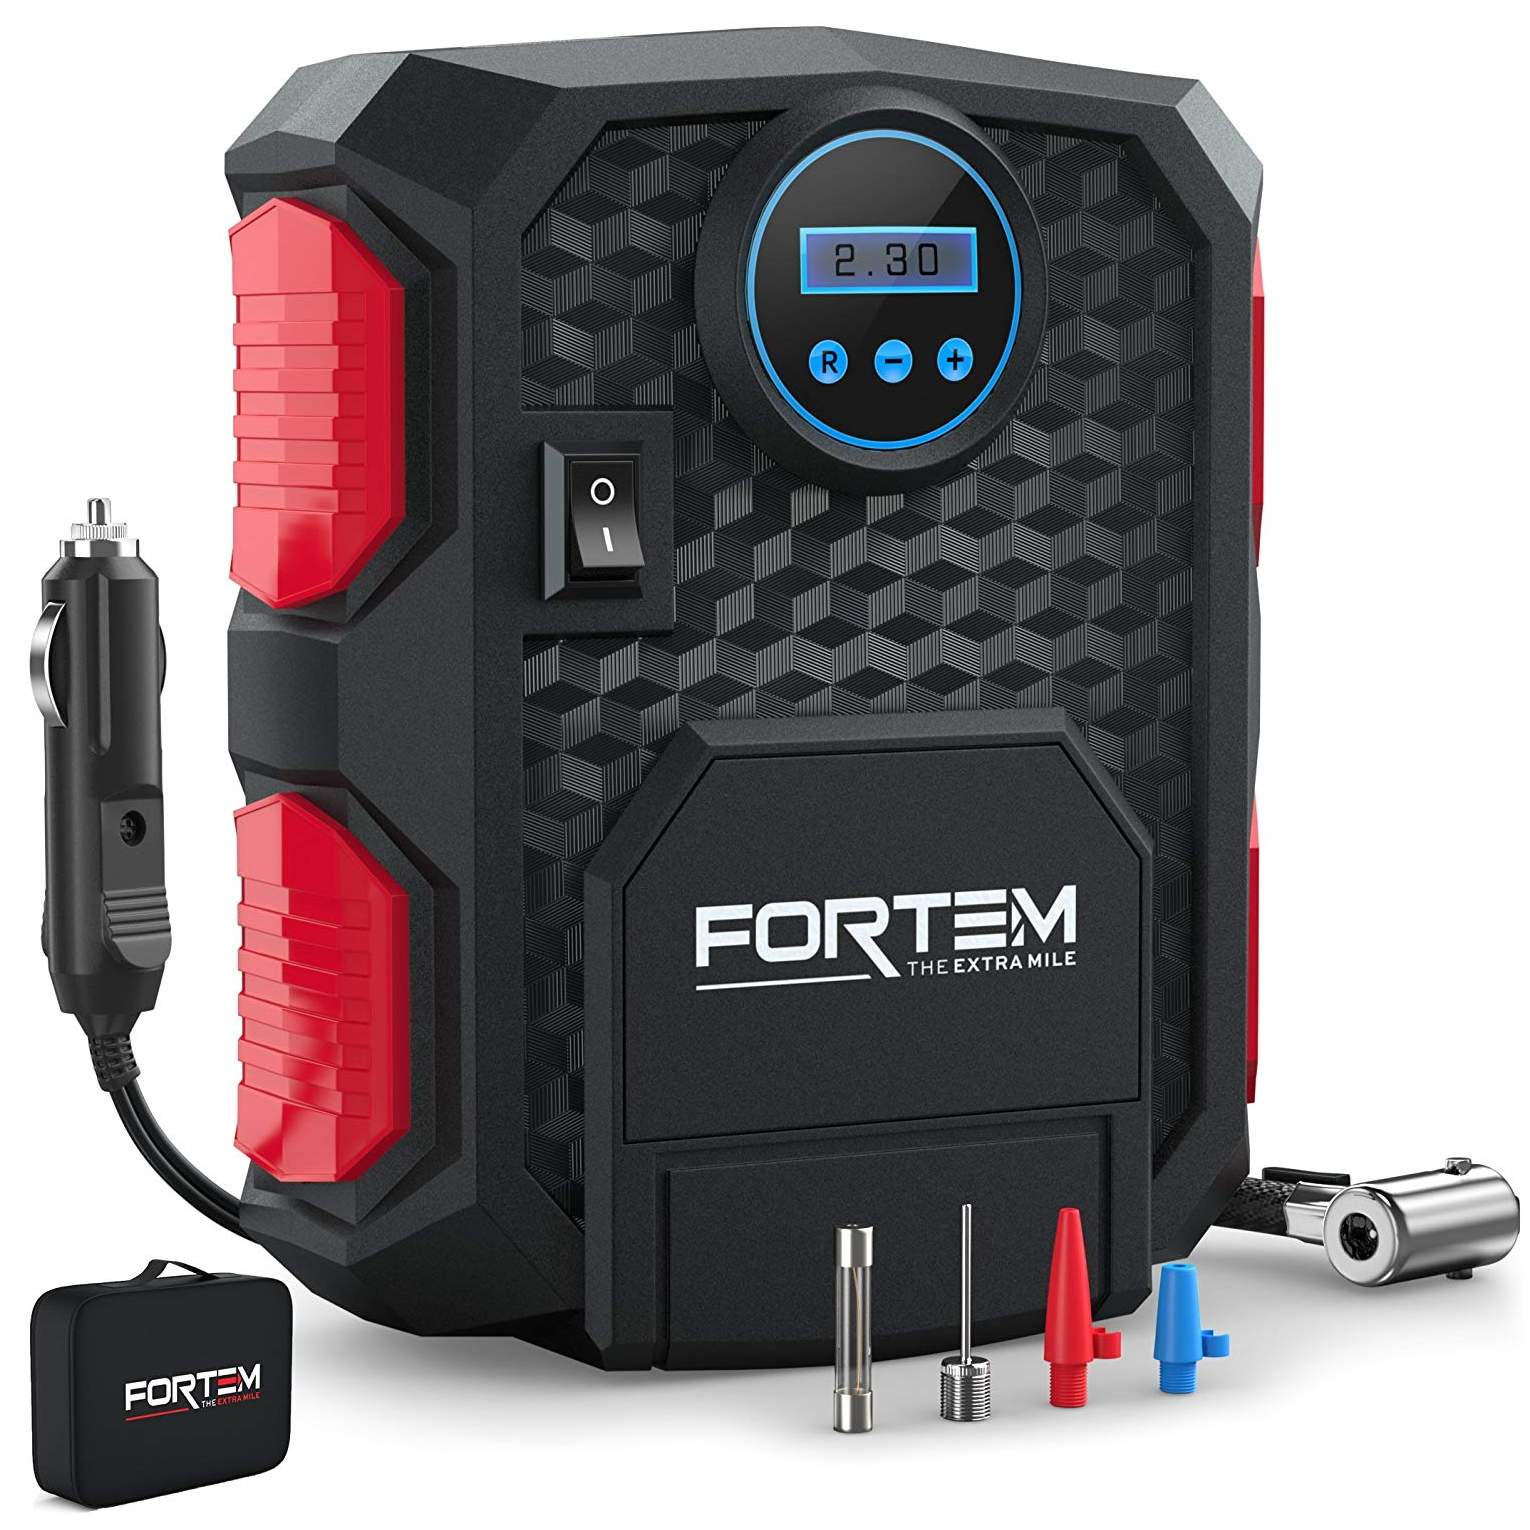 Fortem the Extra Mile Digital Tire Inflator for Car